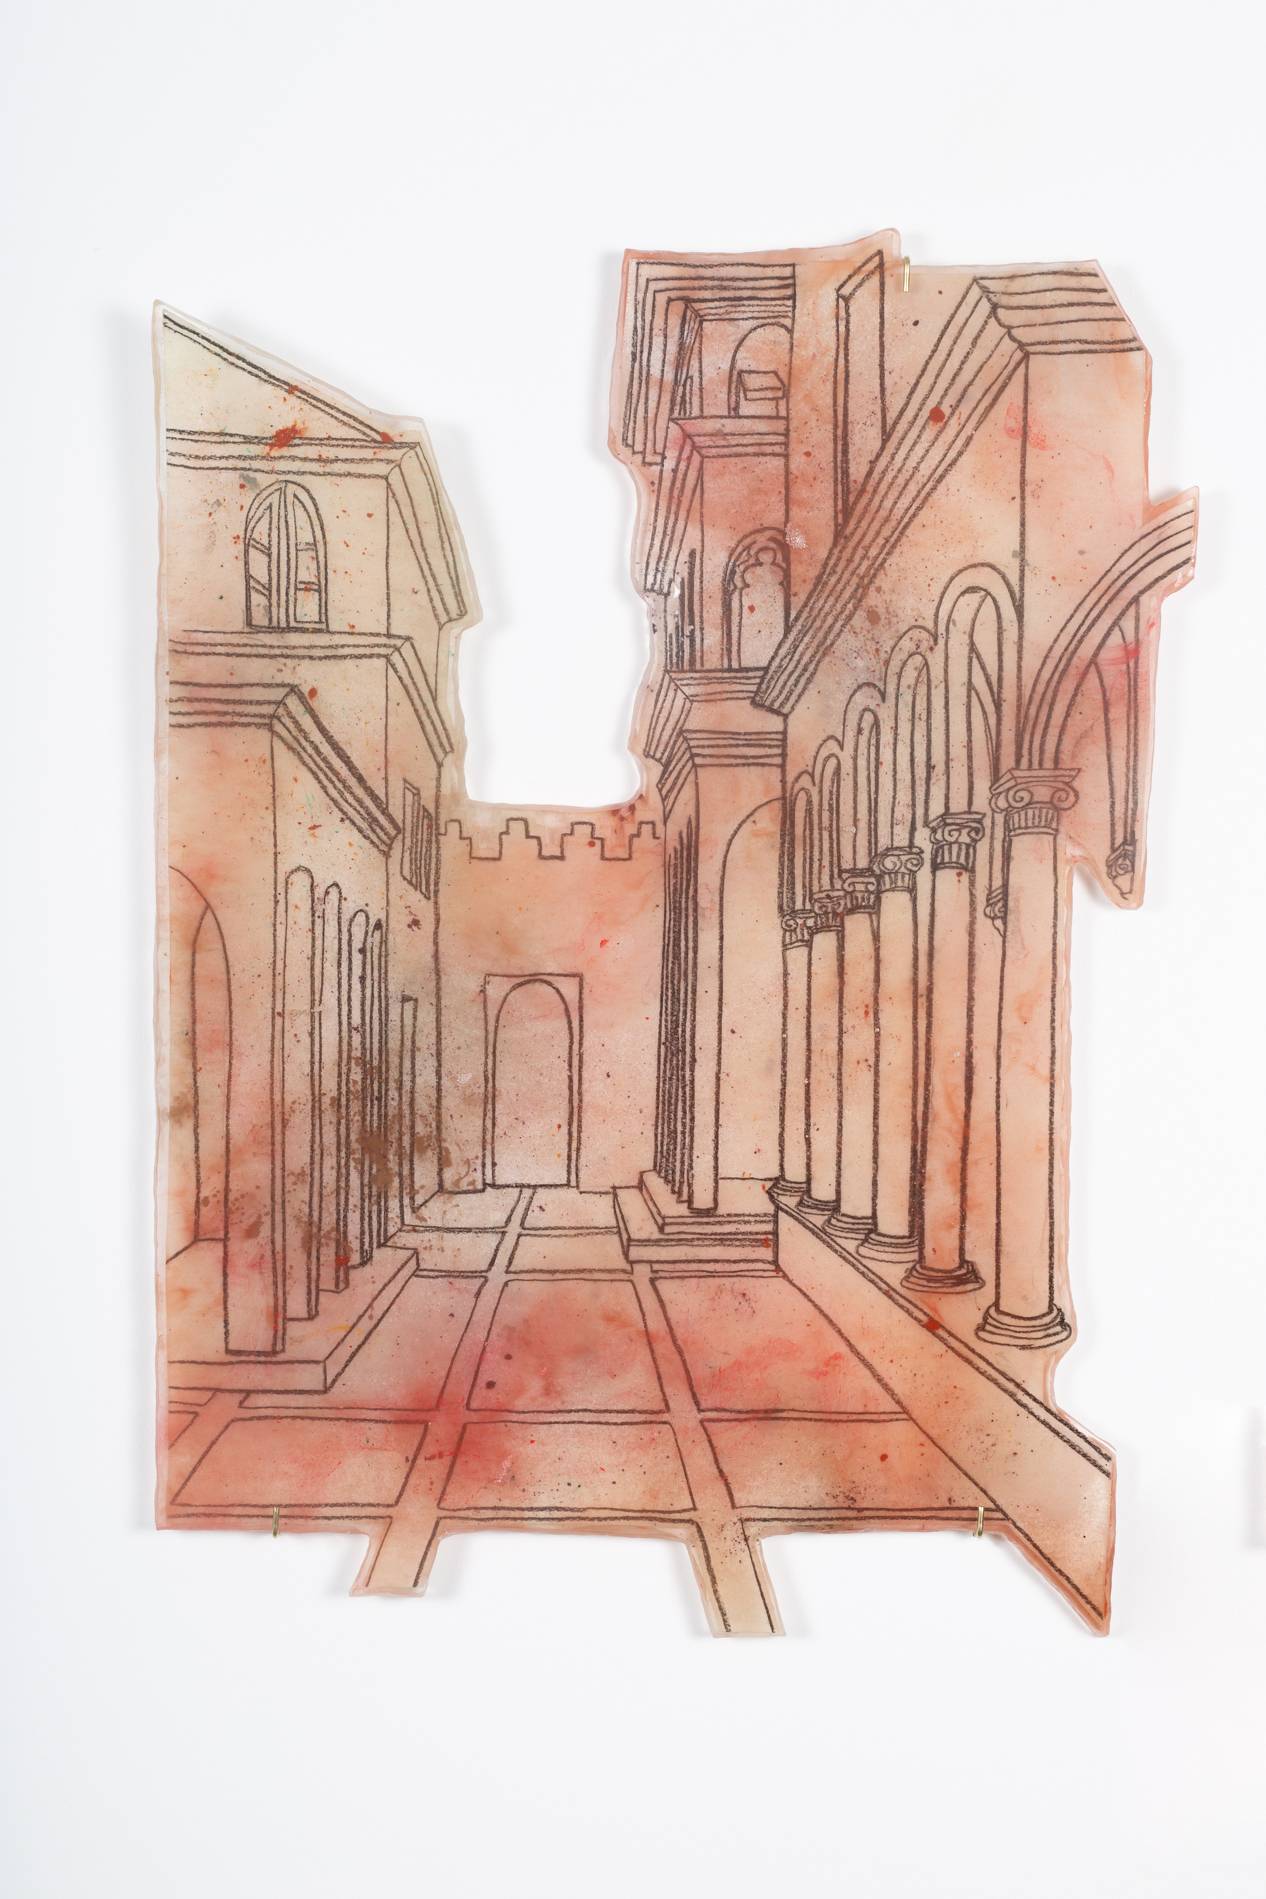 Zuzanna Czebatul, “Bartolomeo” (2020) Resin, handcrafted paper, coal, pigments, 63,5 x 47,5 cm. Picture : Margot Montigny